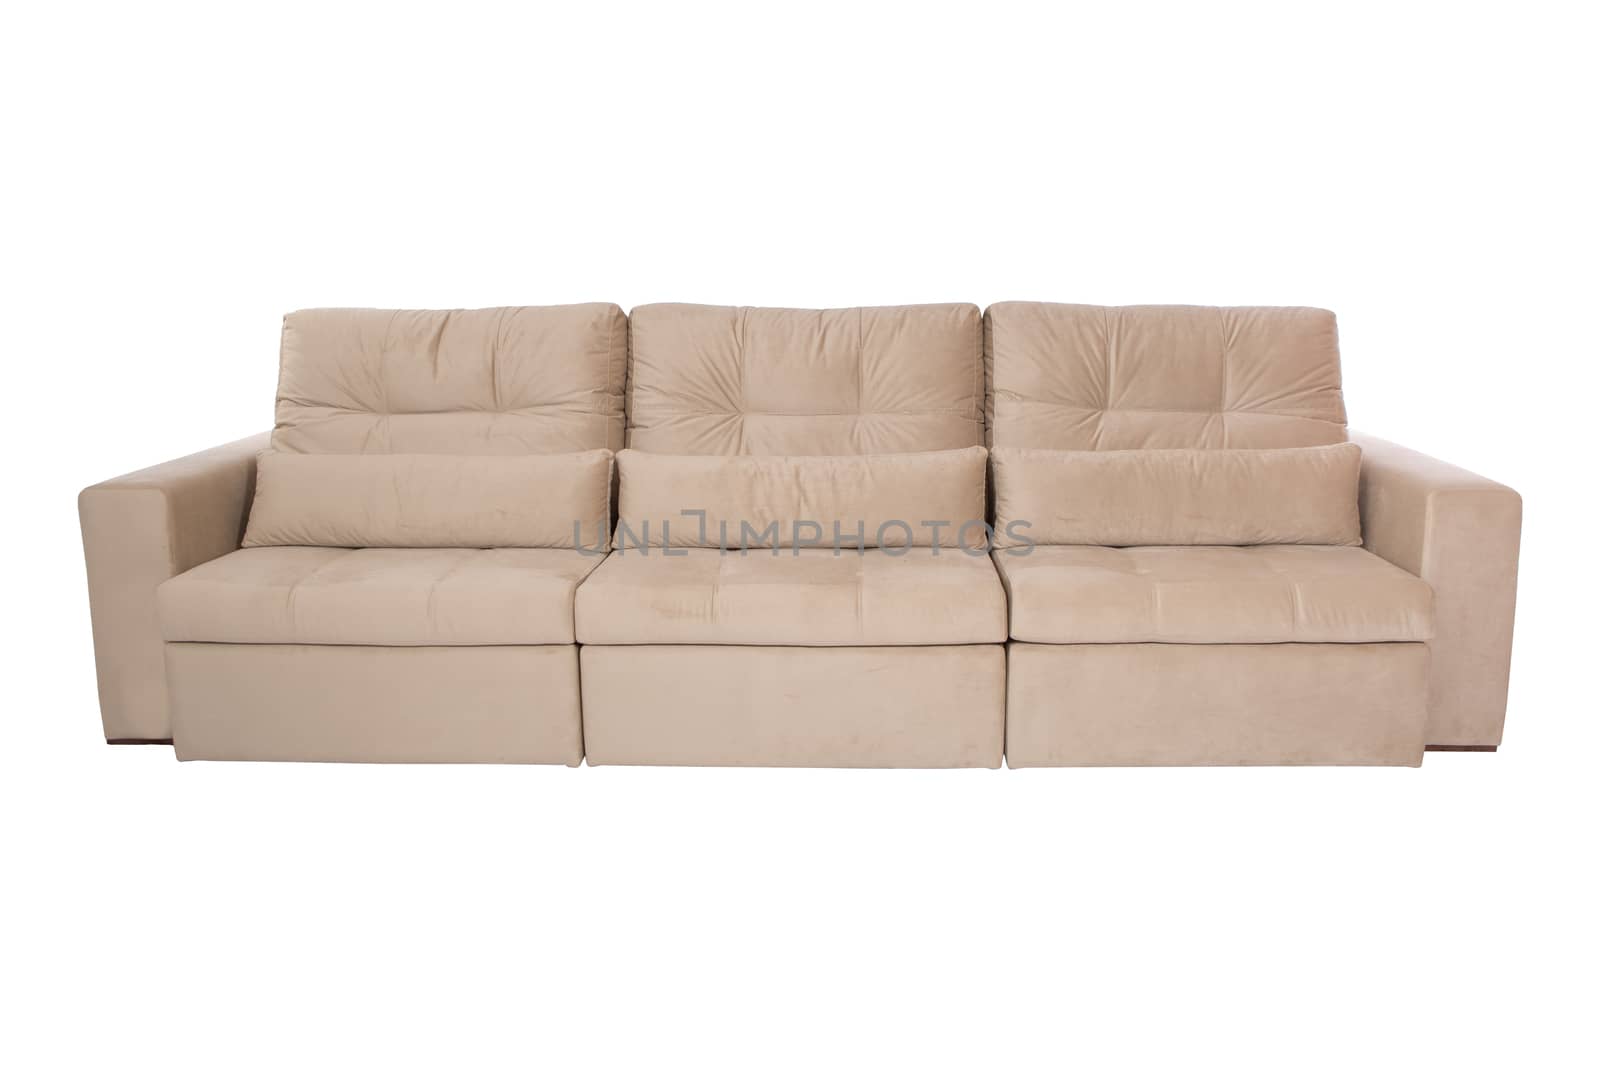 Three seats cozy sofa isolated on white background